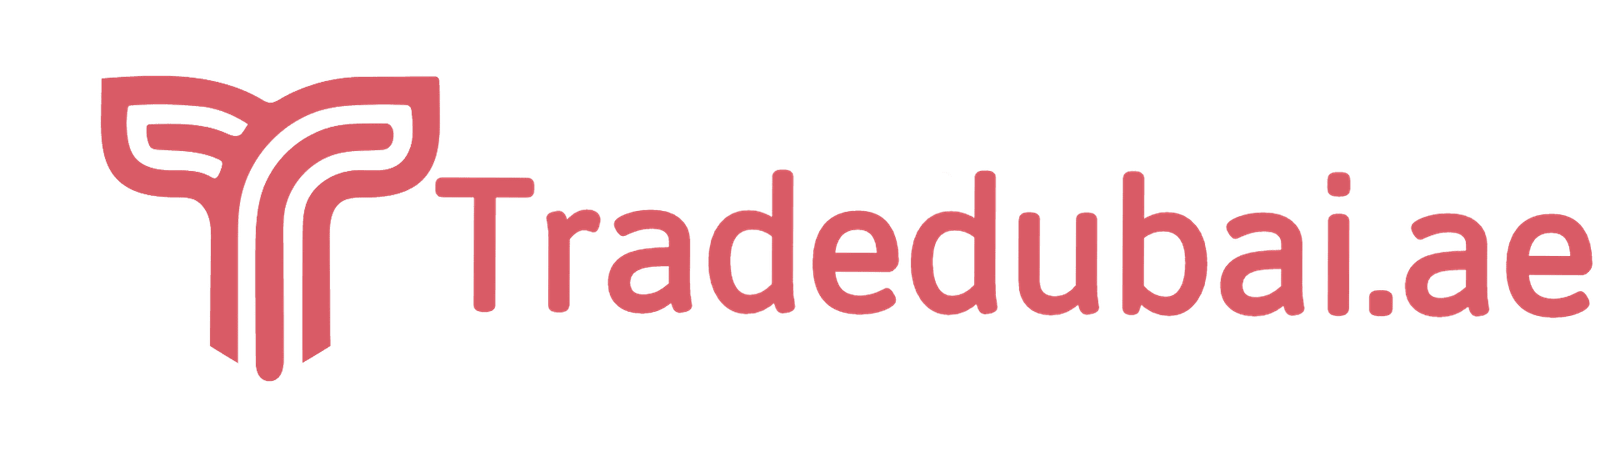 Tradedubai logo - Tradedubai.ae Wholesale B2B Market